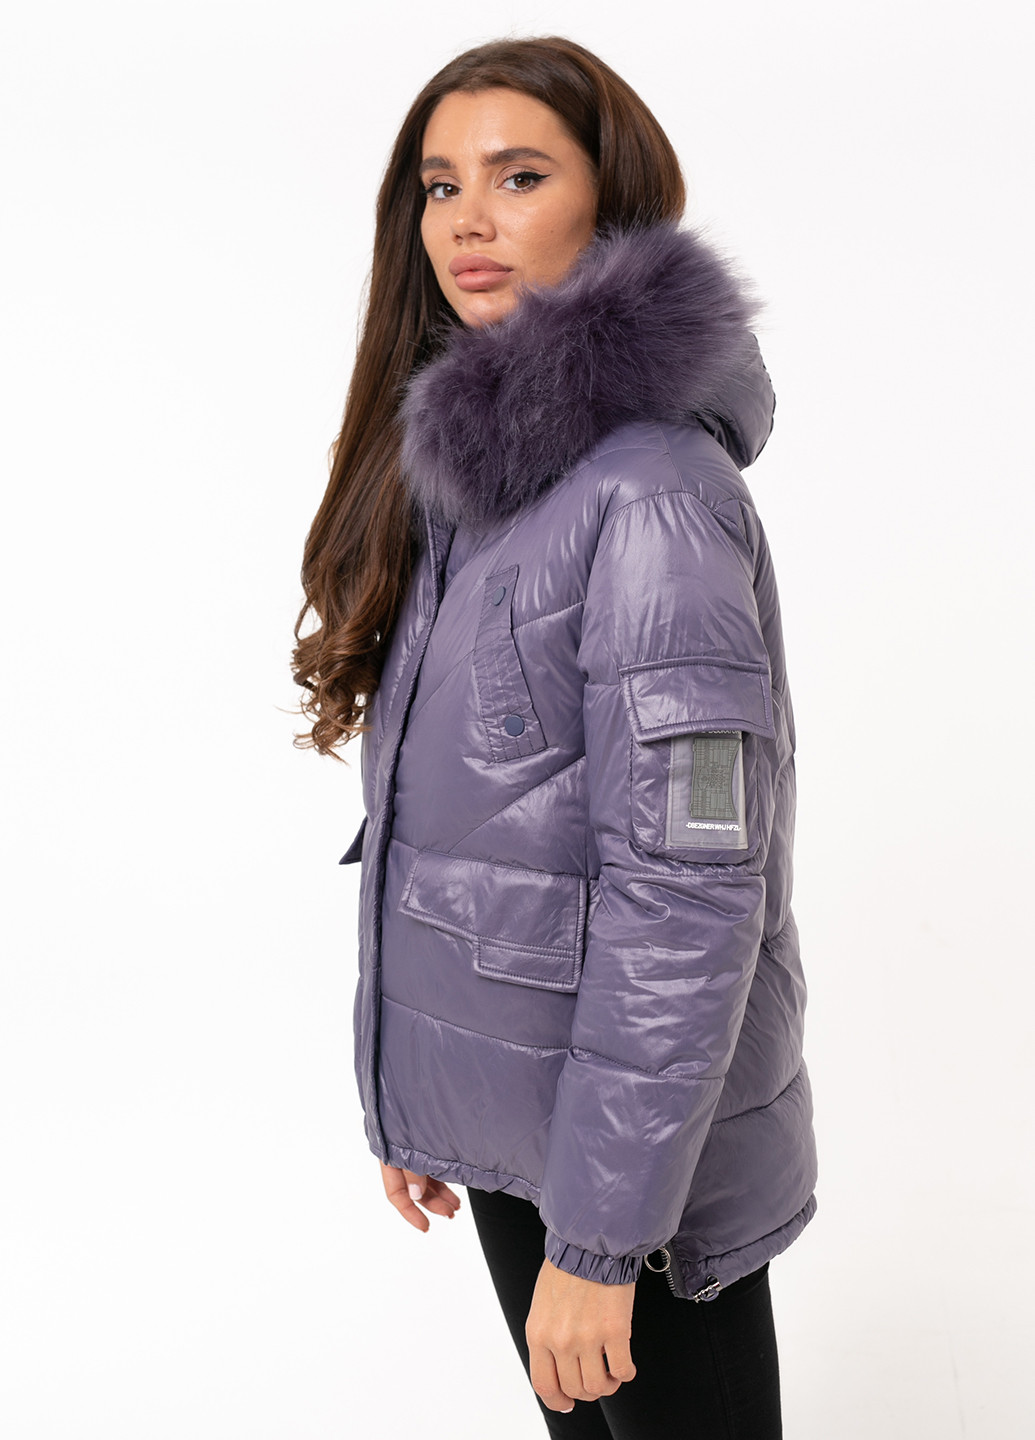 Фиолетовая зимняя куртка Icon